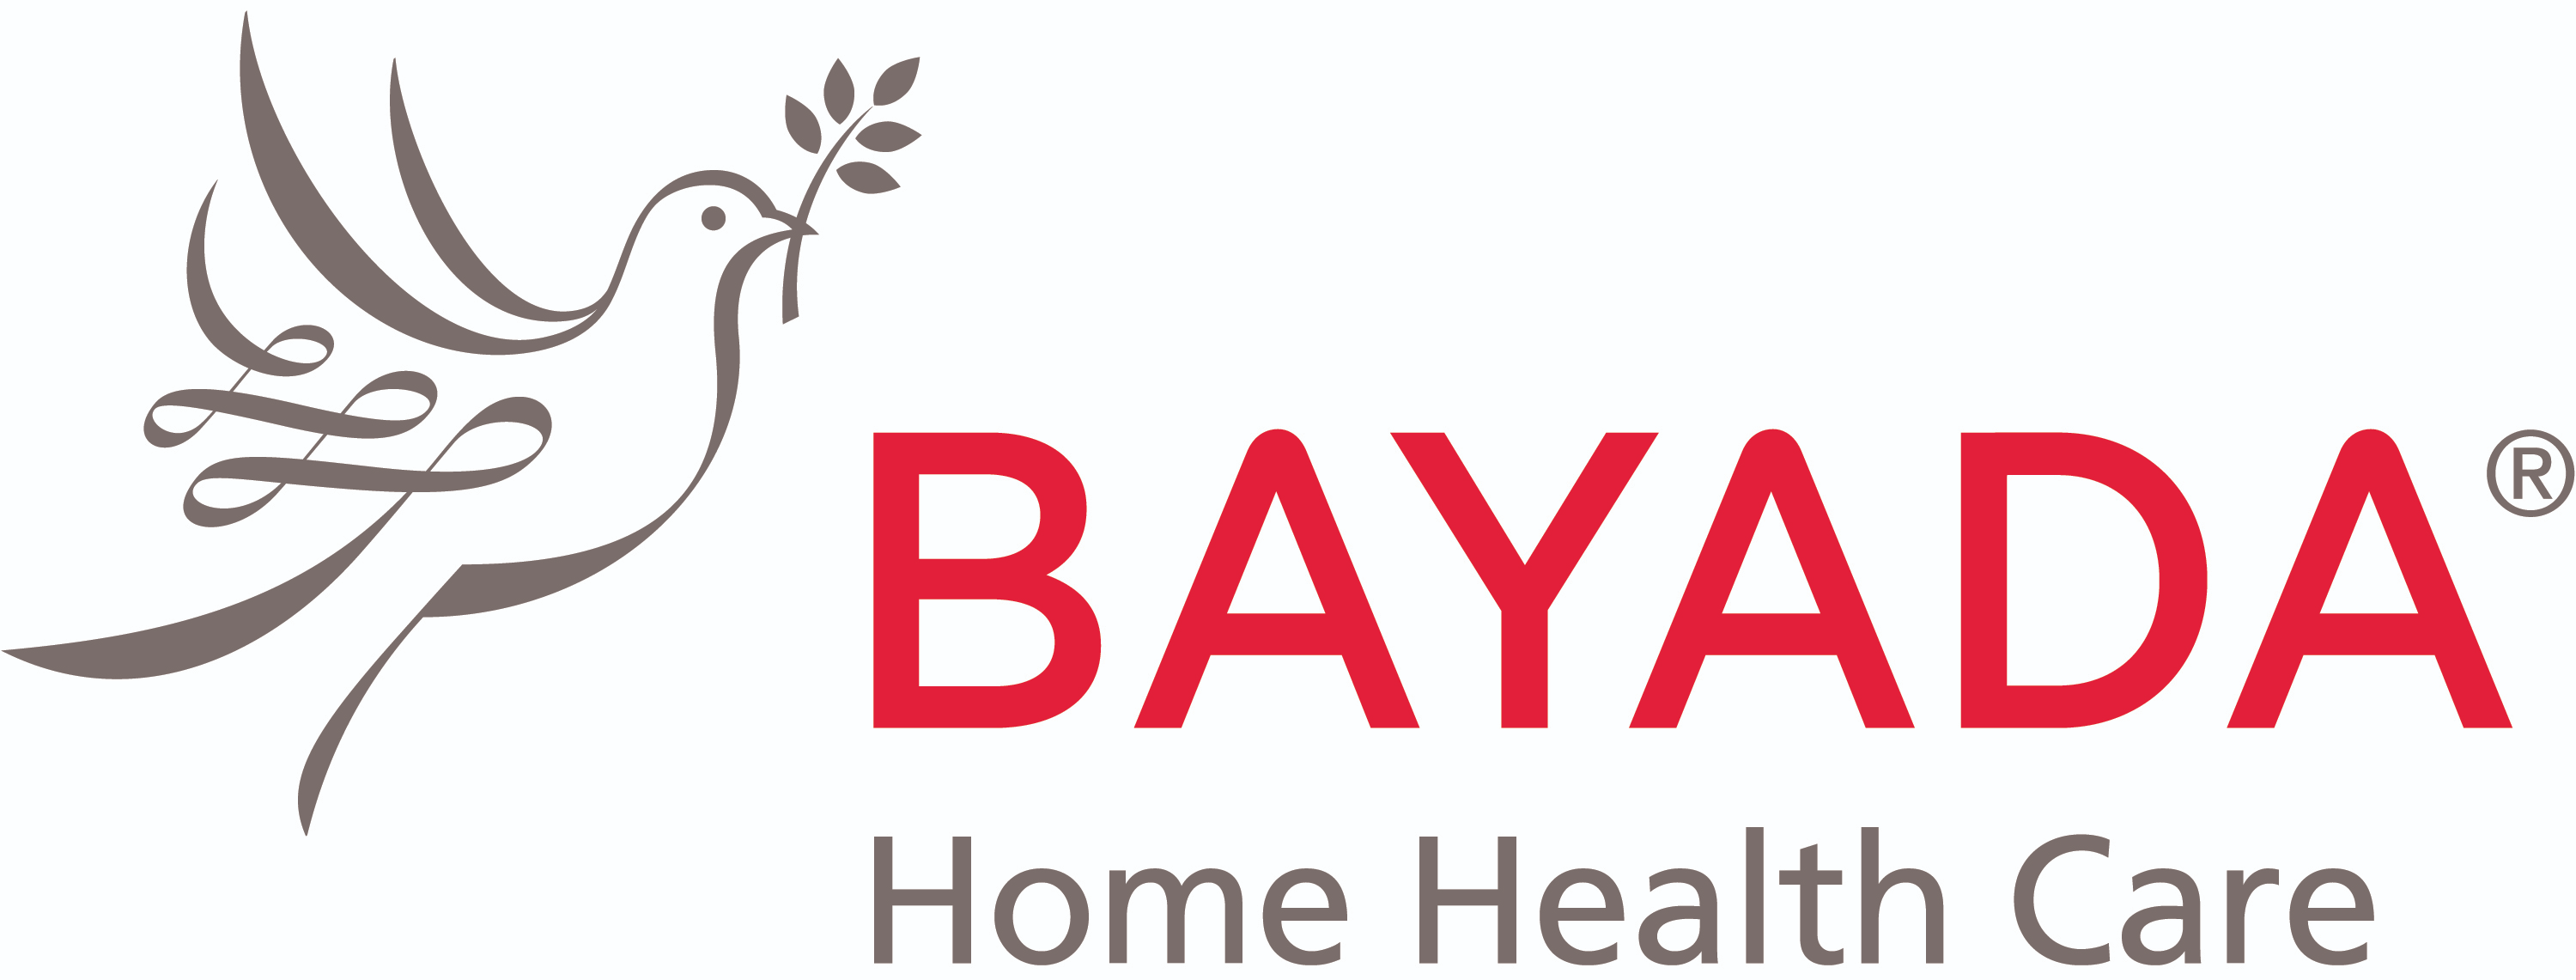 BAYADA Home Health Care of Tampa at Tampa, FL